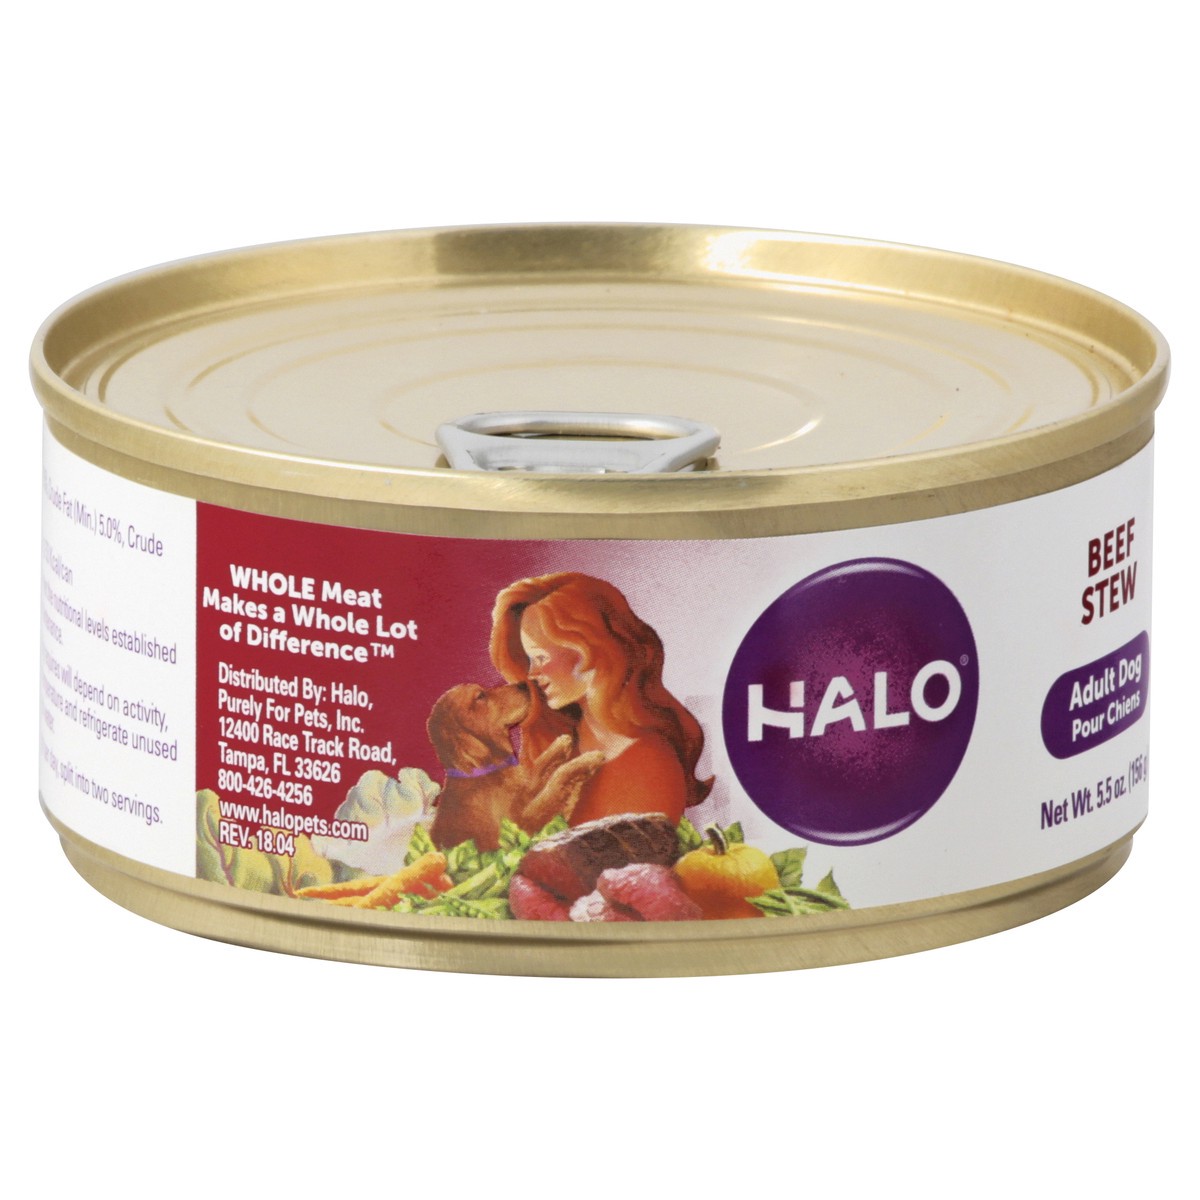 slide 5 of 11, Halo Adult Dog Beef Stew Food for Dogs 5.5 oz, 5.5 oz